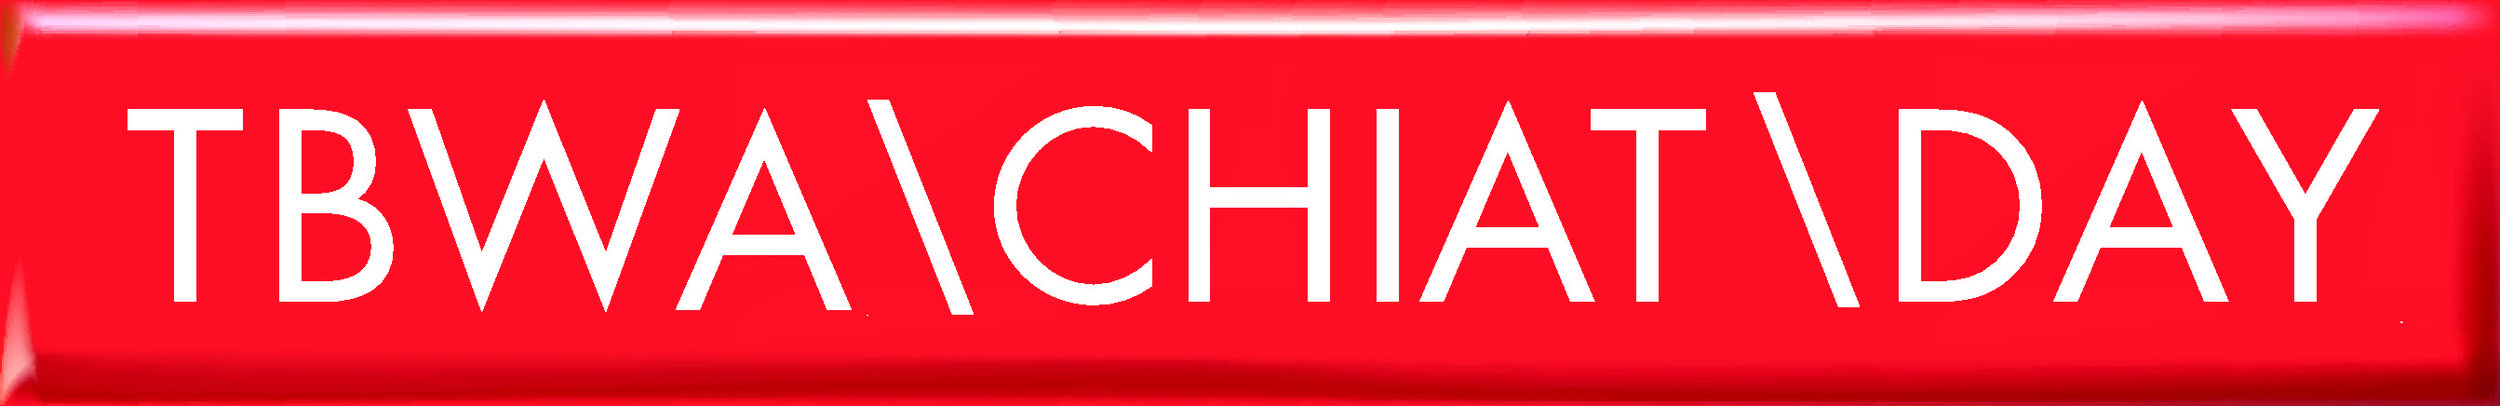 tbwa-chiat-day-logo.jpg